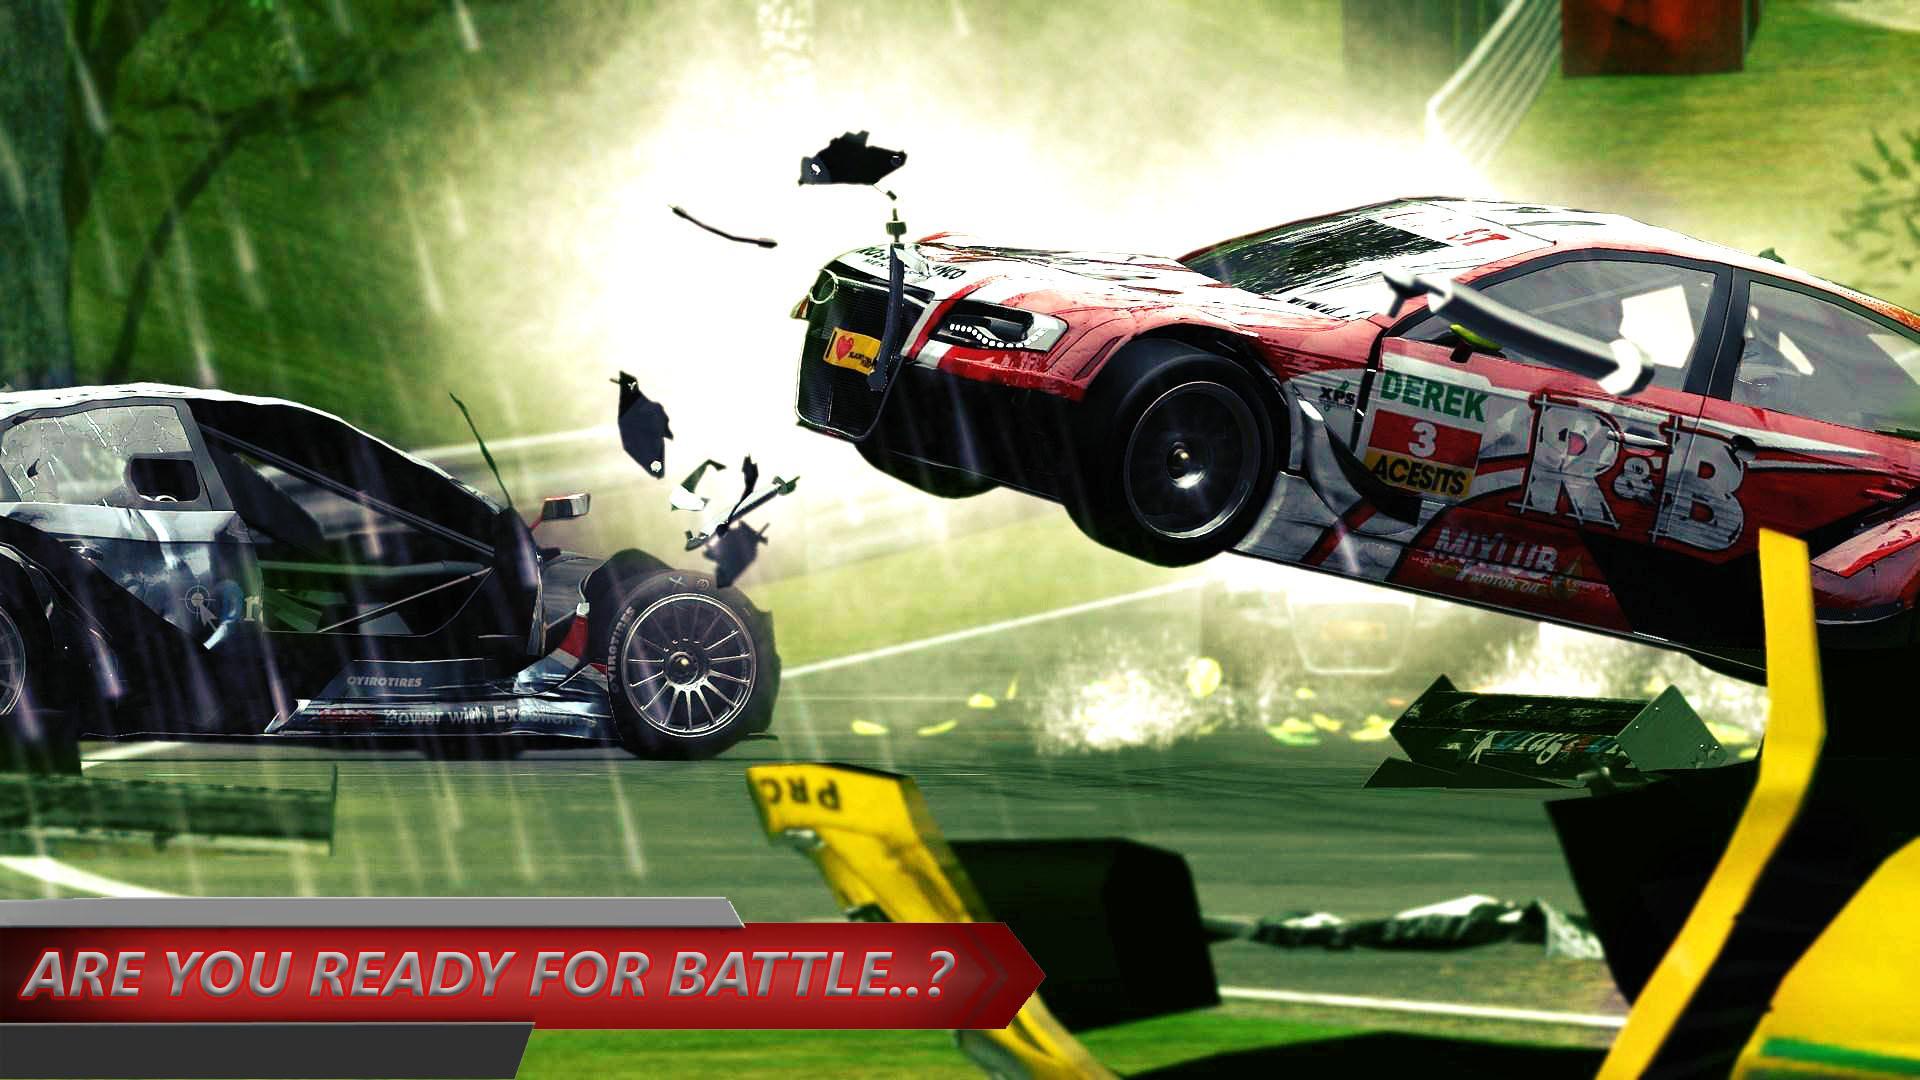 Car Crash Simulator And Beam Damage Racing For Android Apk Download - roblox car crash simulator group